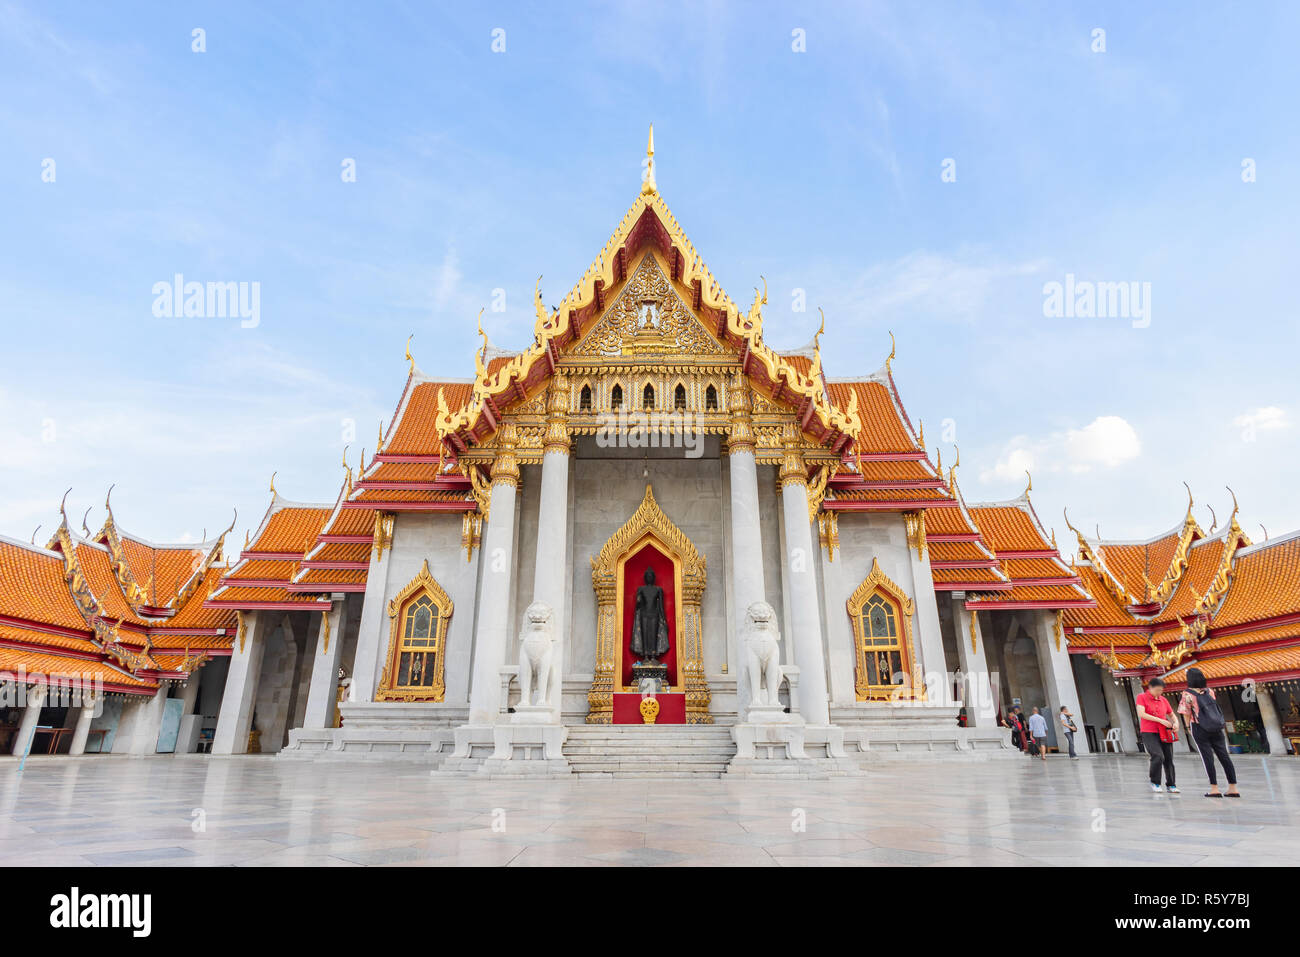 Thai Marble Temple (Wat Benchamabophit Dusitvanaram) with copy space in Bangkok, Thailand Stock Photo